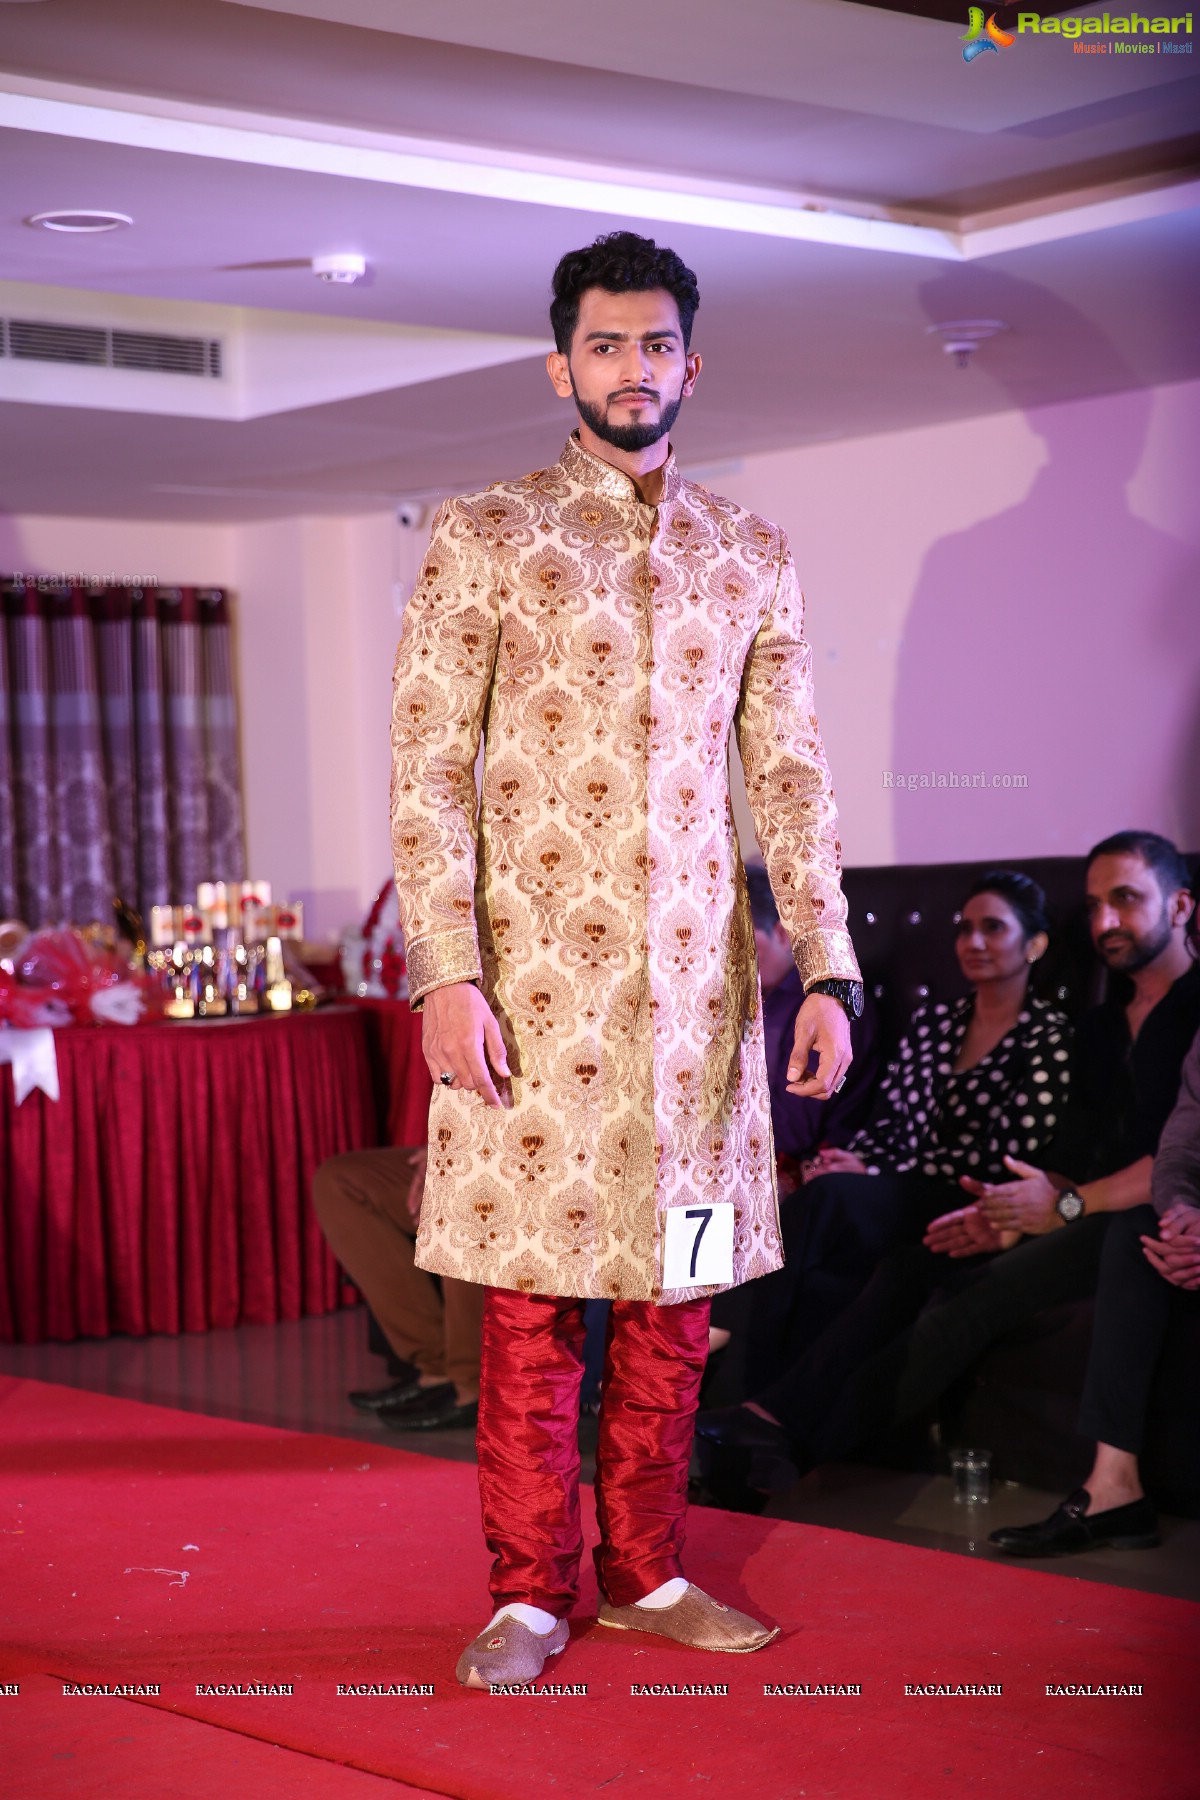 Mr & Miss Hyderabad Fashions Grand Finale 2018 by Junaid Quadri